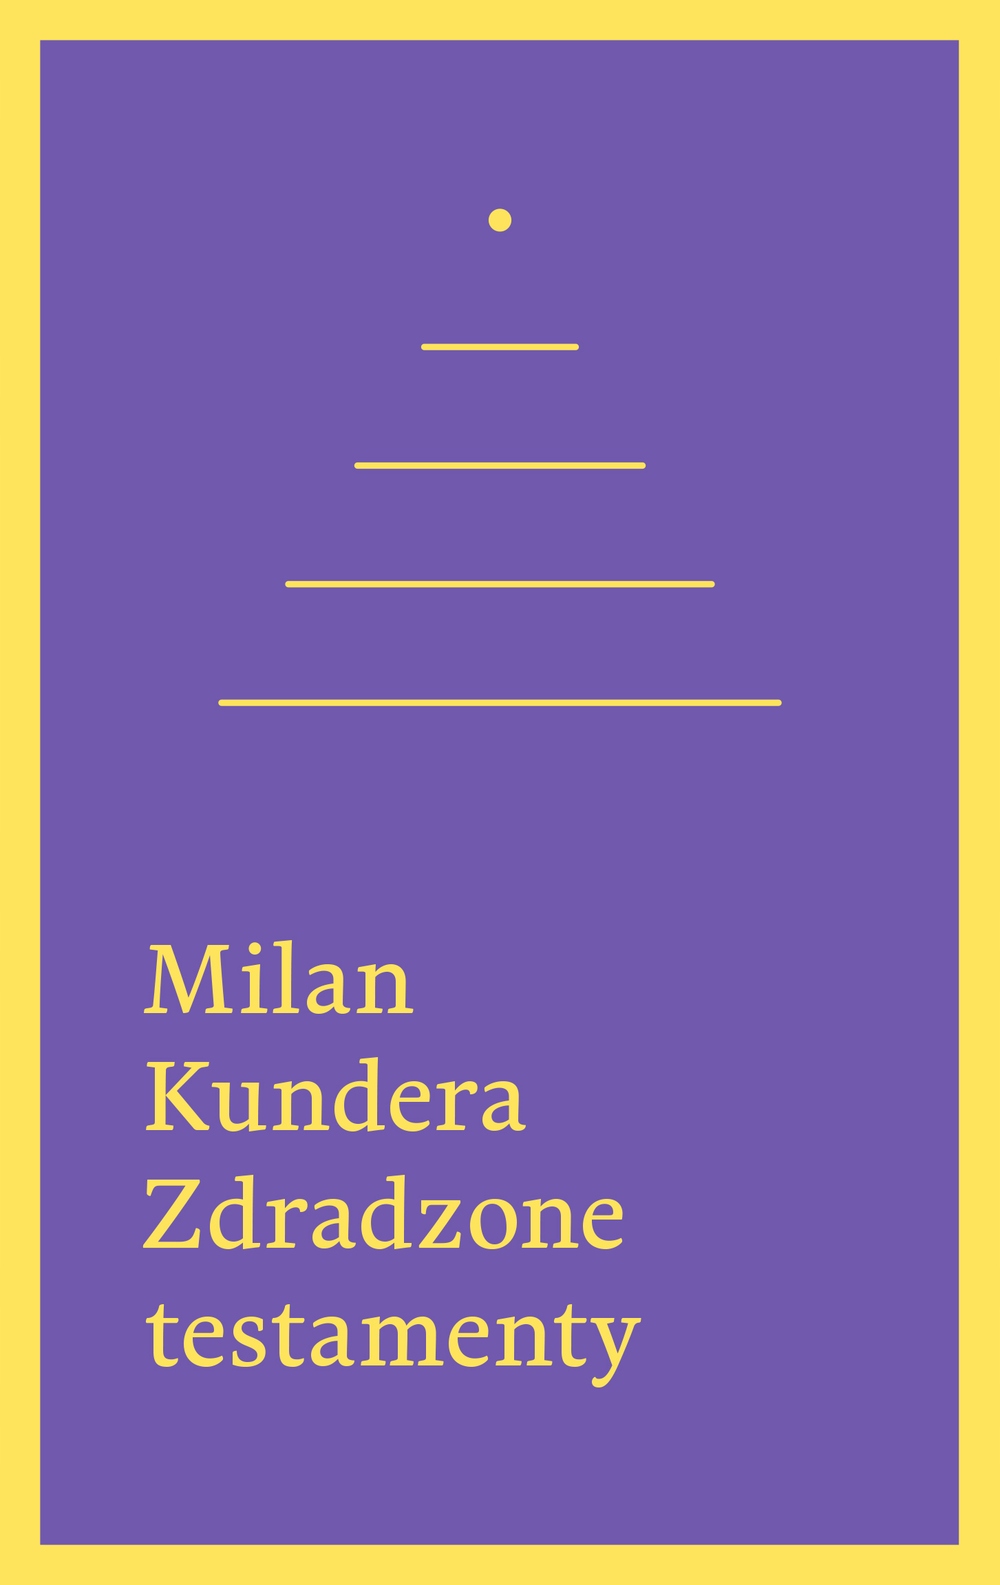 For title 'Zdradzone testamenty' cover was not found